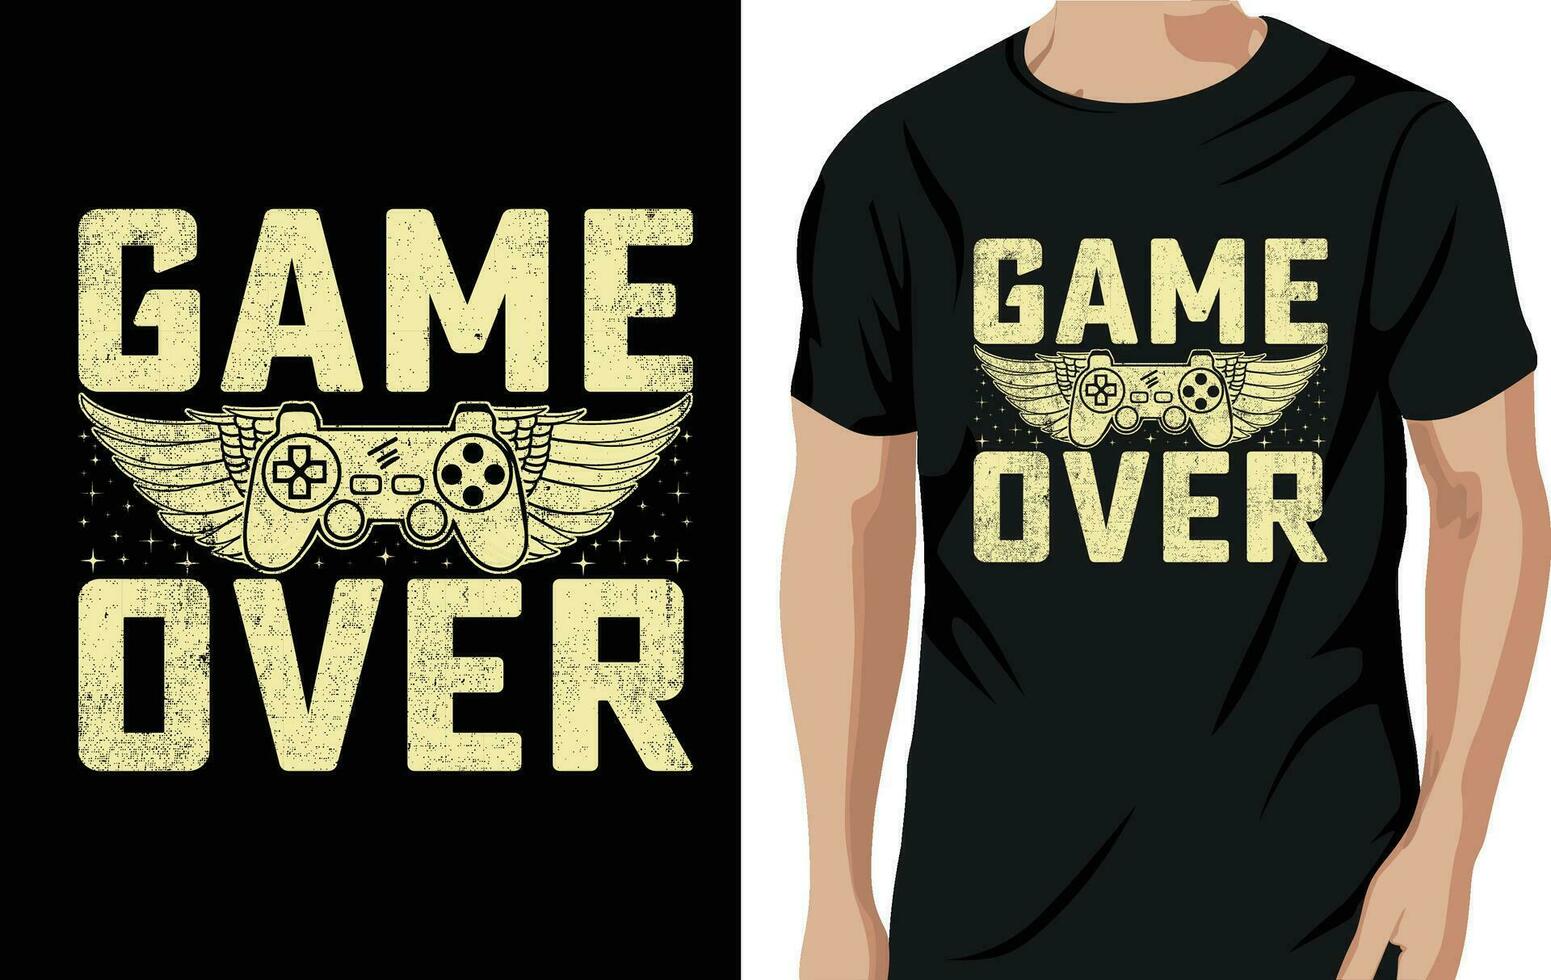 gaming t-shirt design vektor